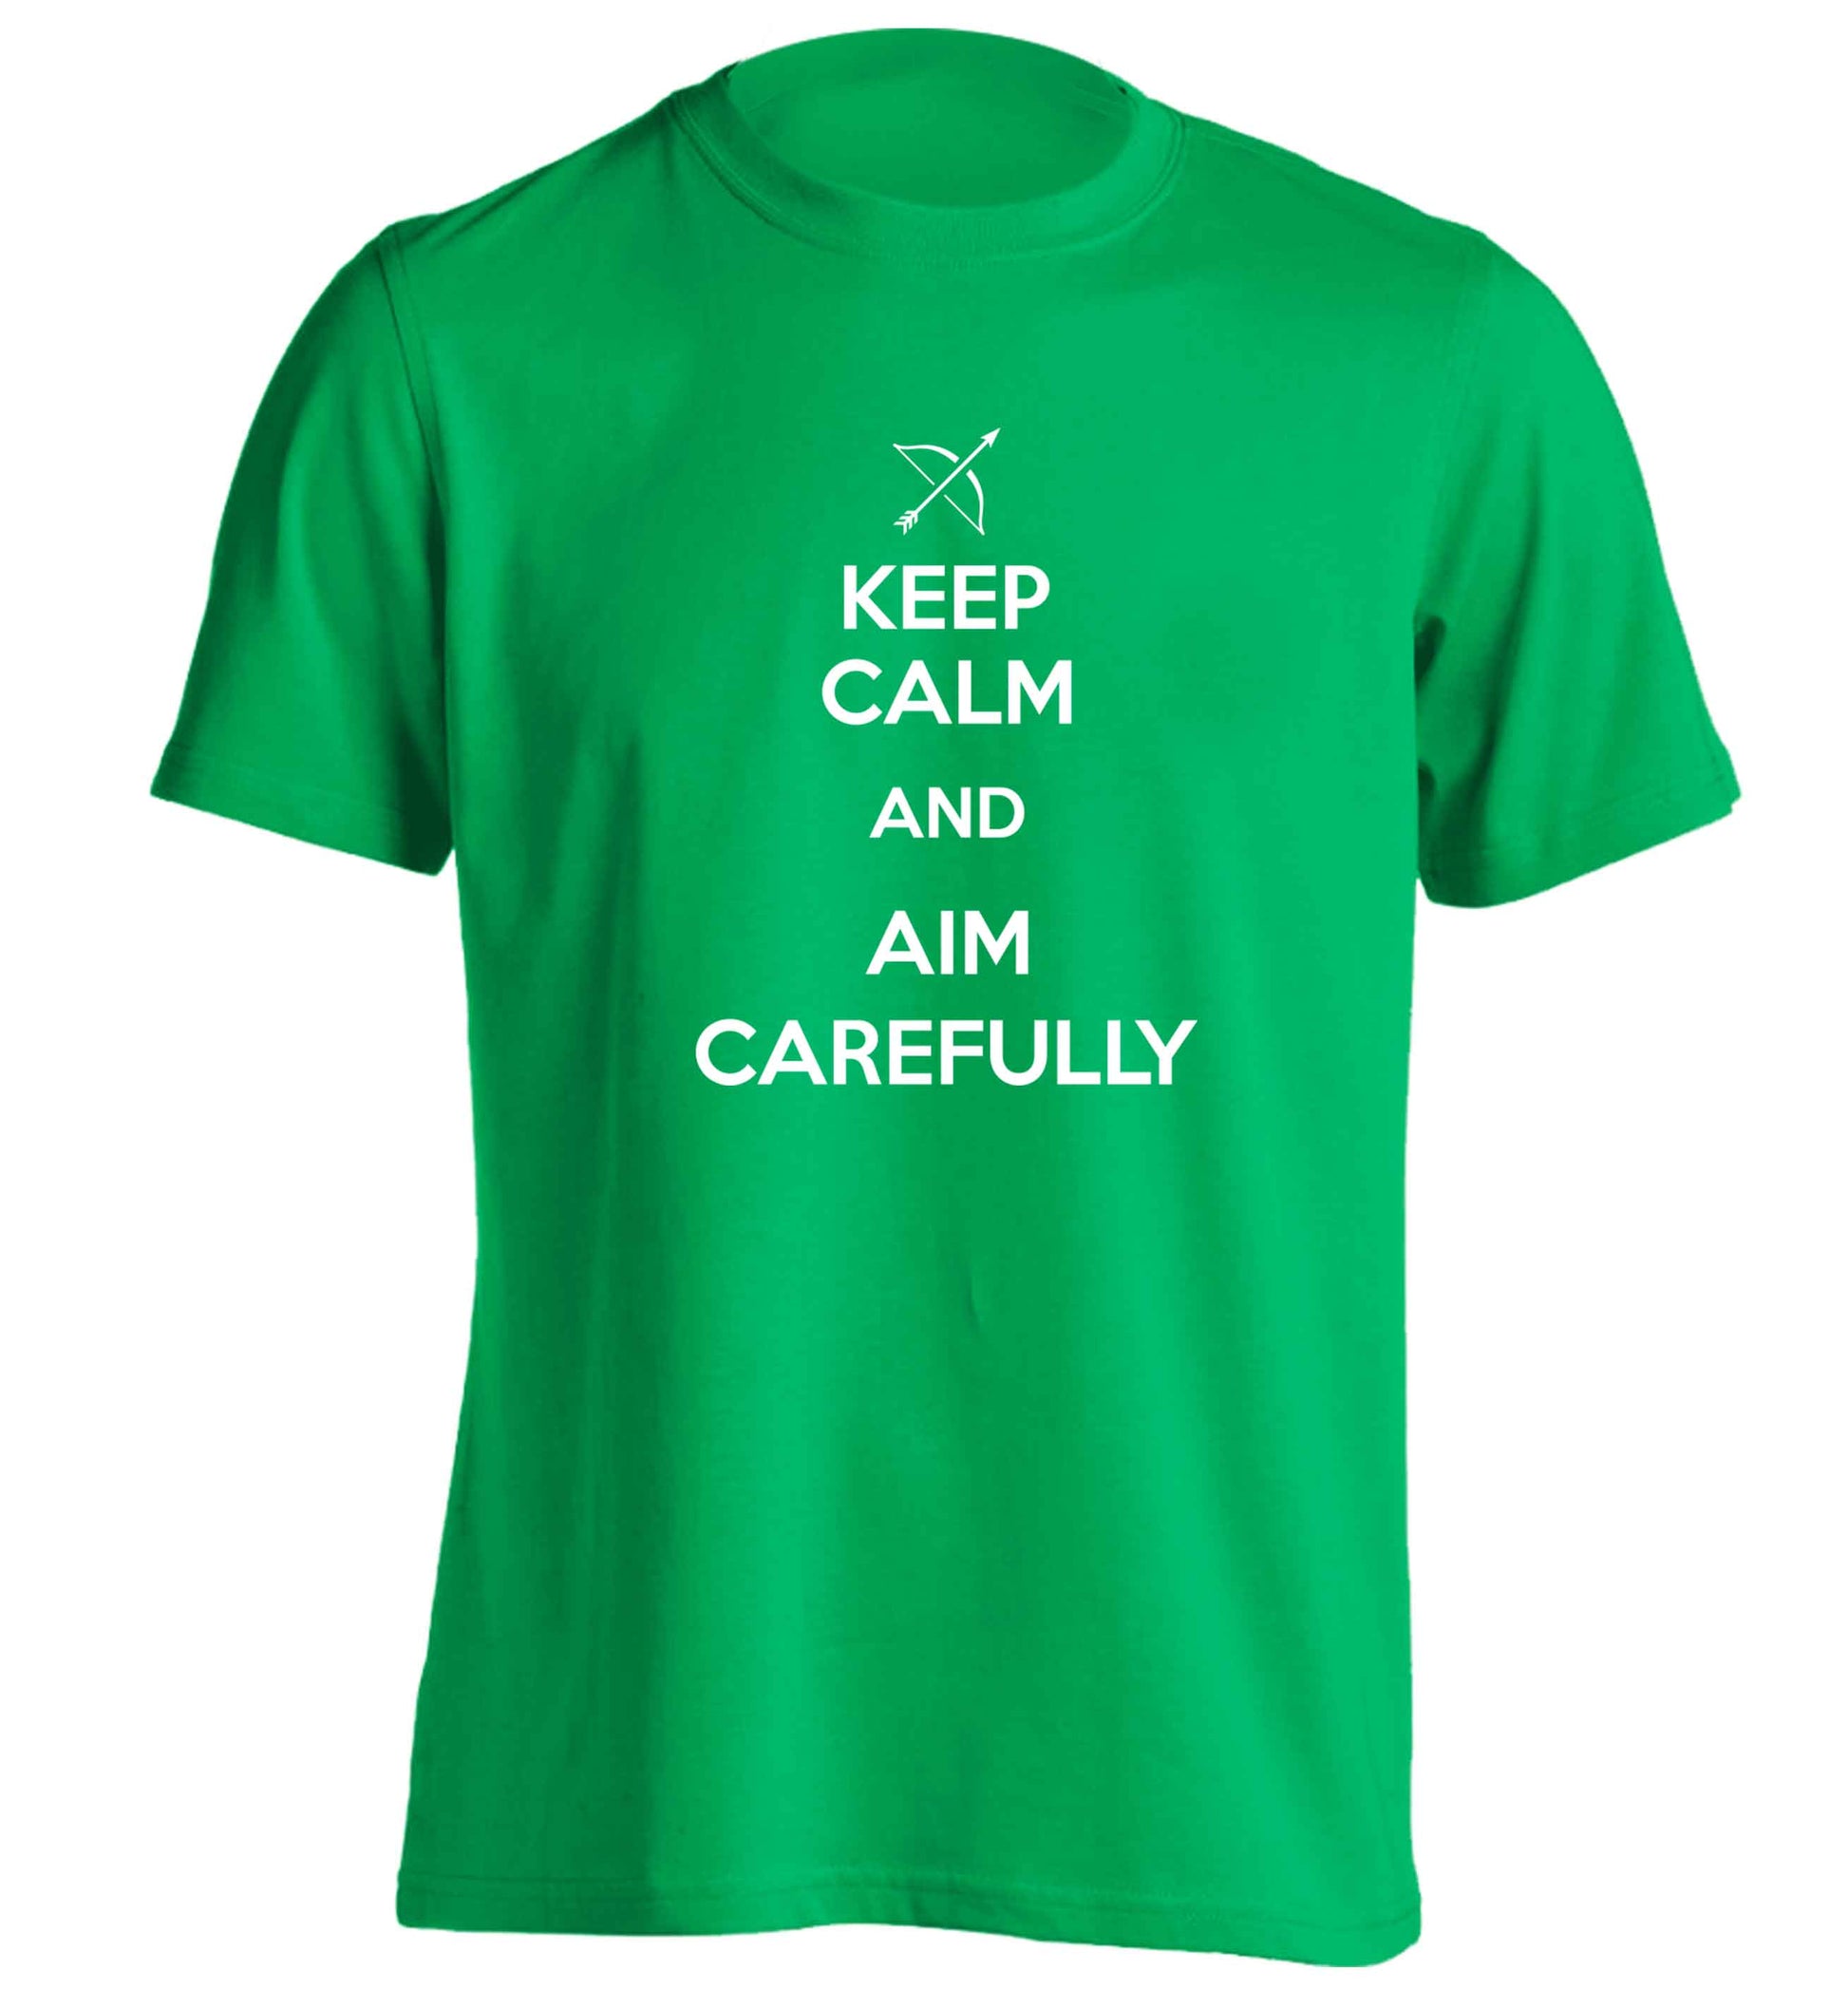 Keep calm and aim carefully adults unisex green Tshirt 2XL